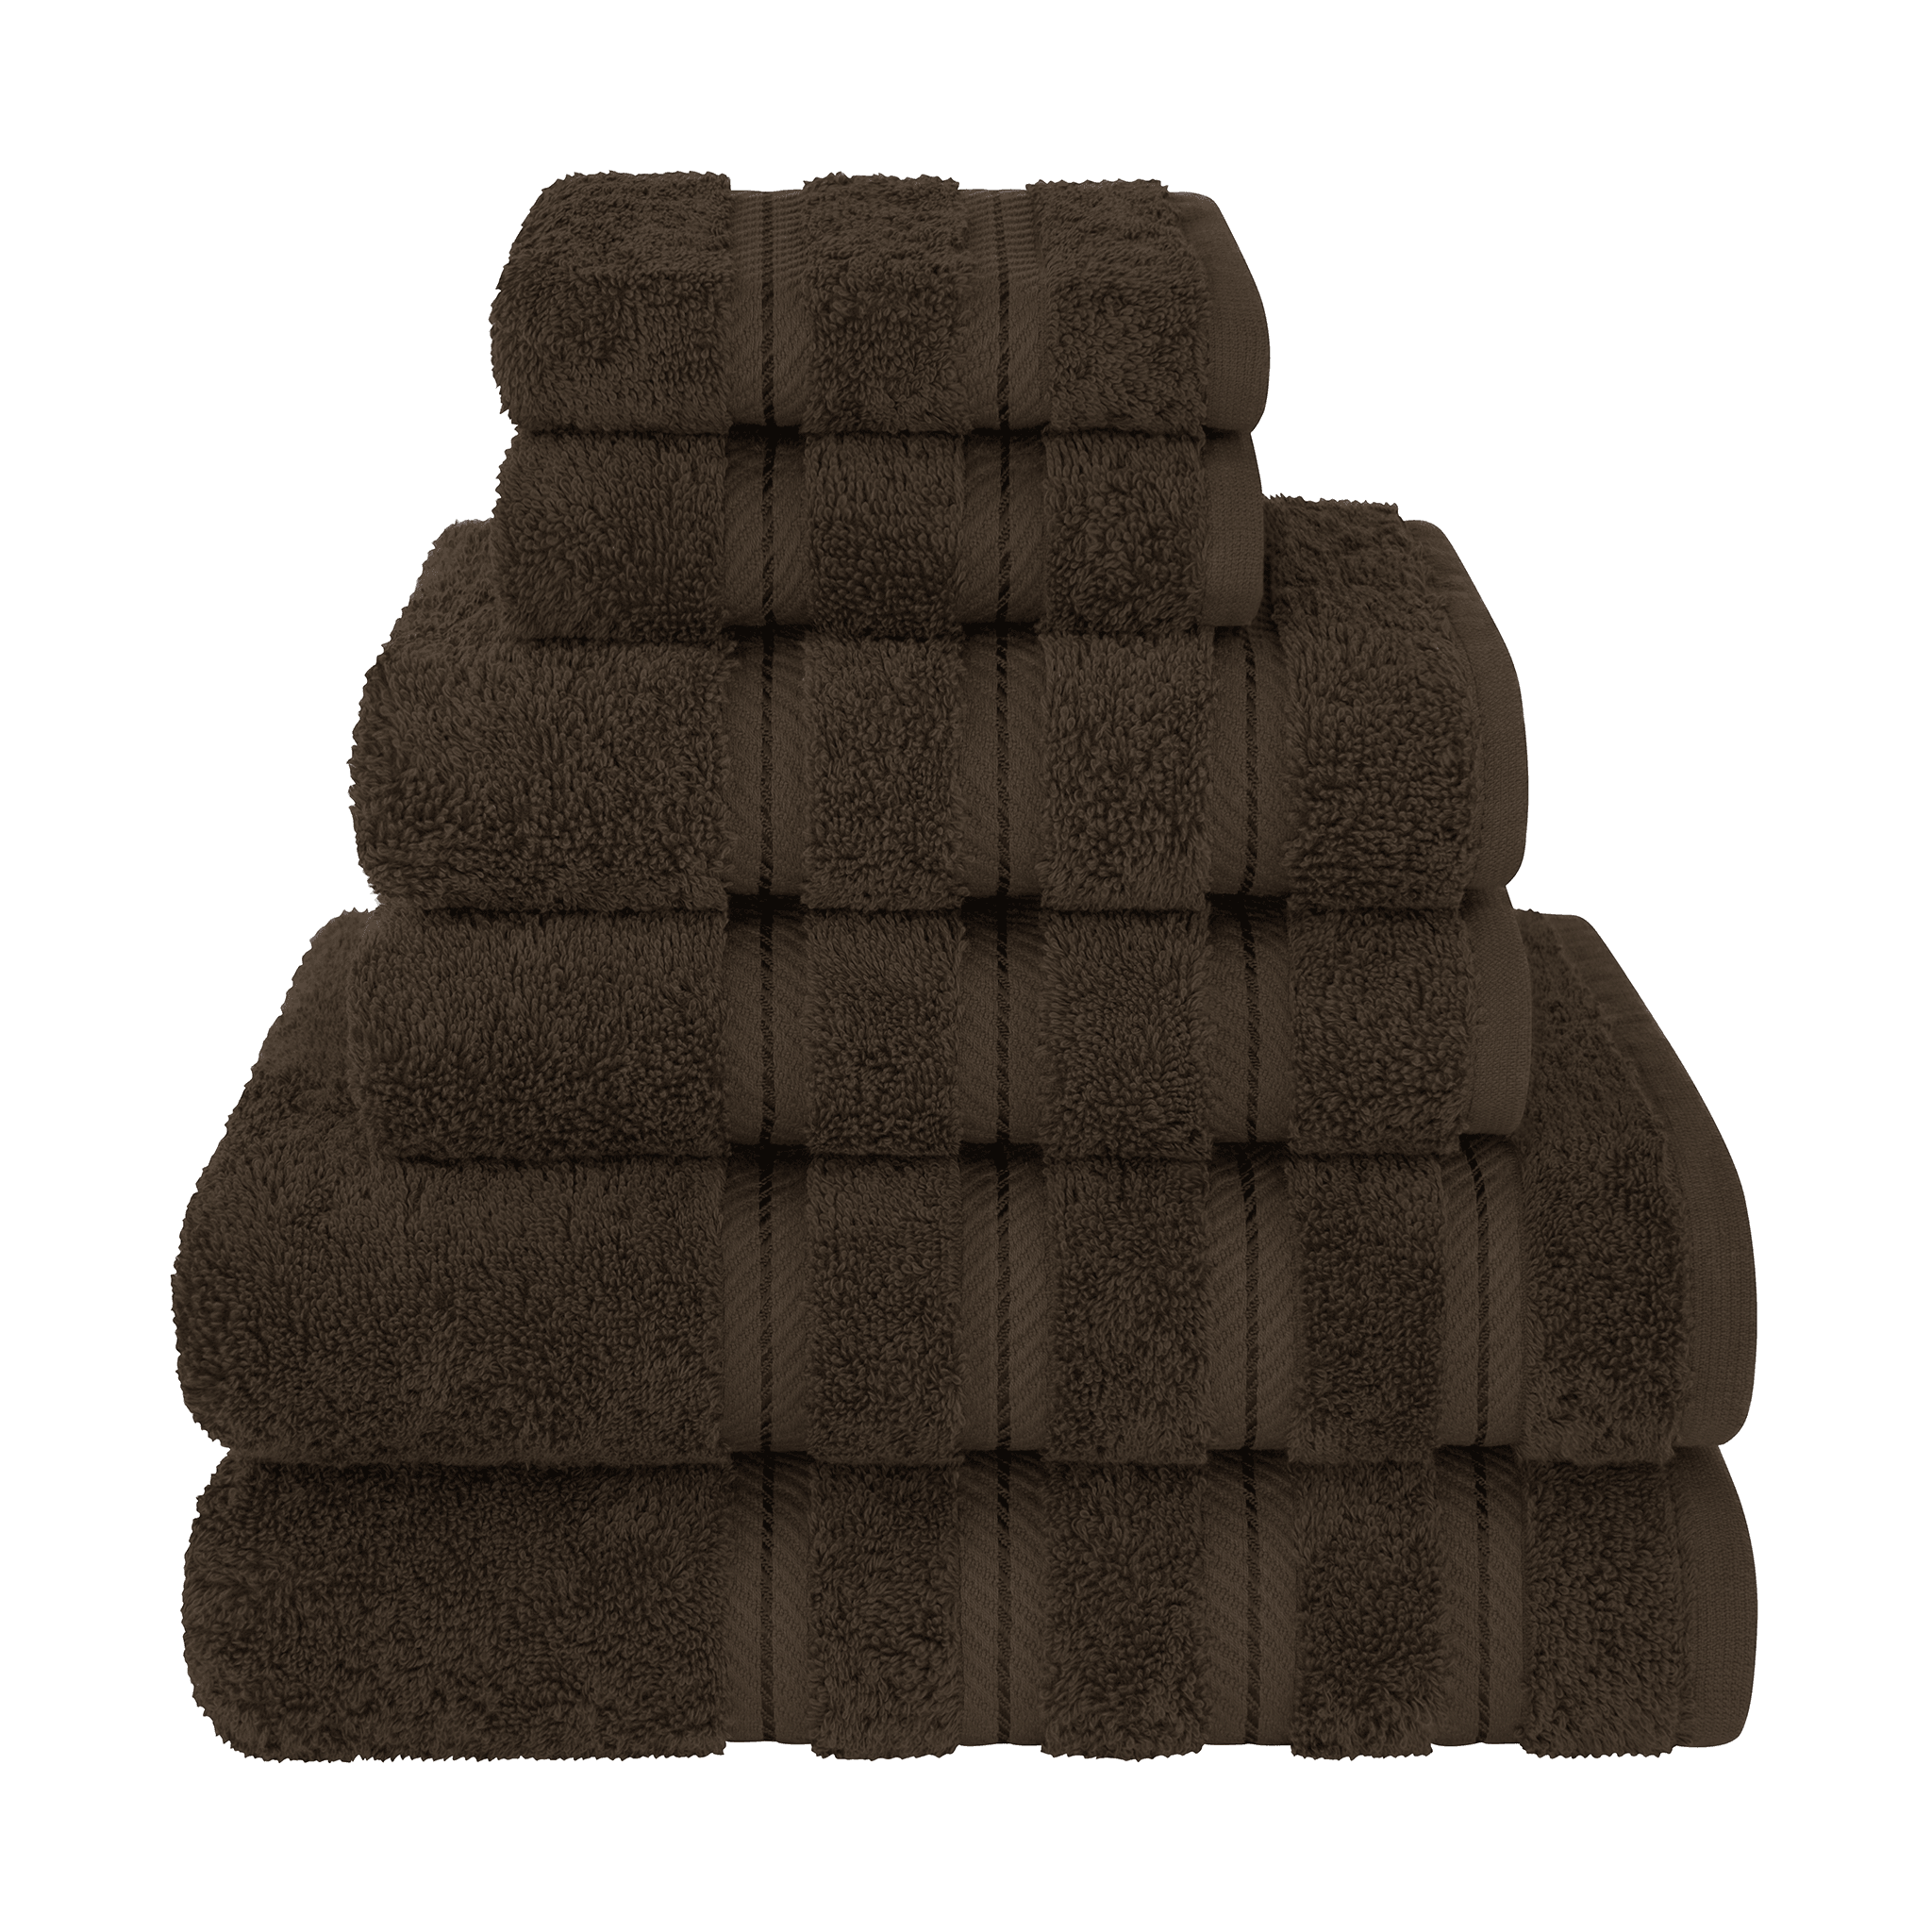 American Soft Linen - 6 Piece Turkish Cotton Bath Towel Set - Chocolate-Brown - 1